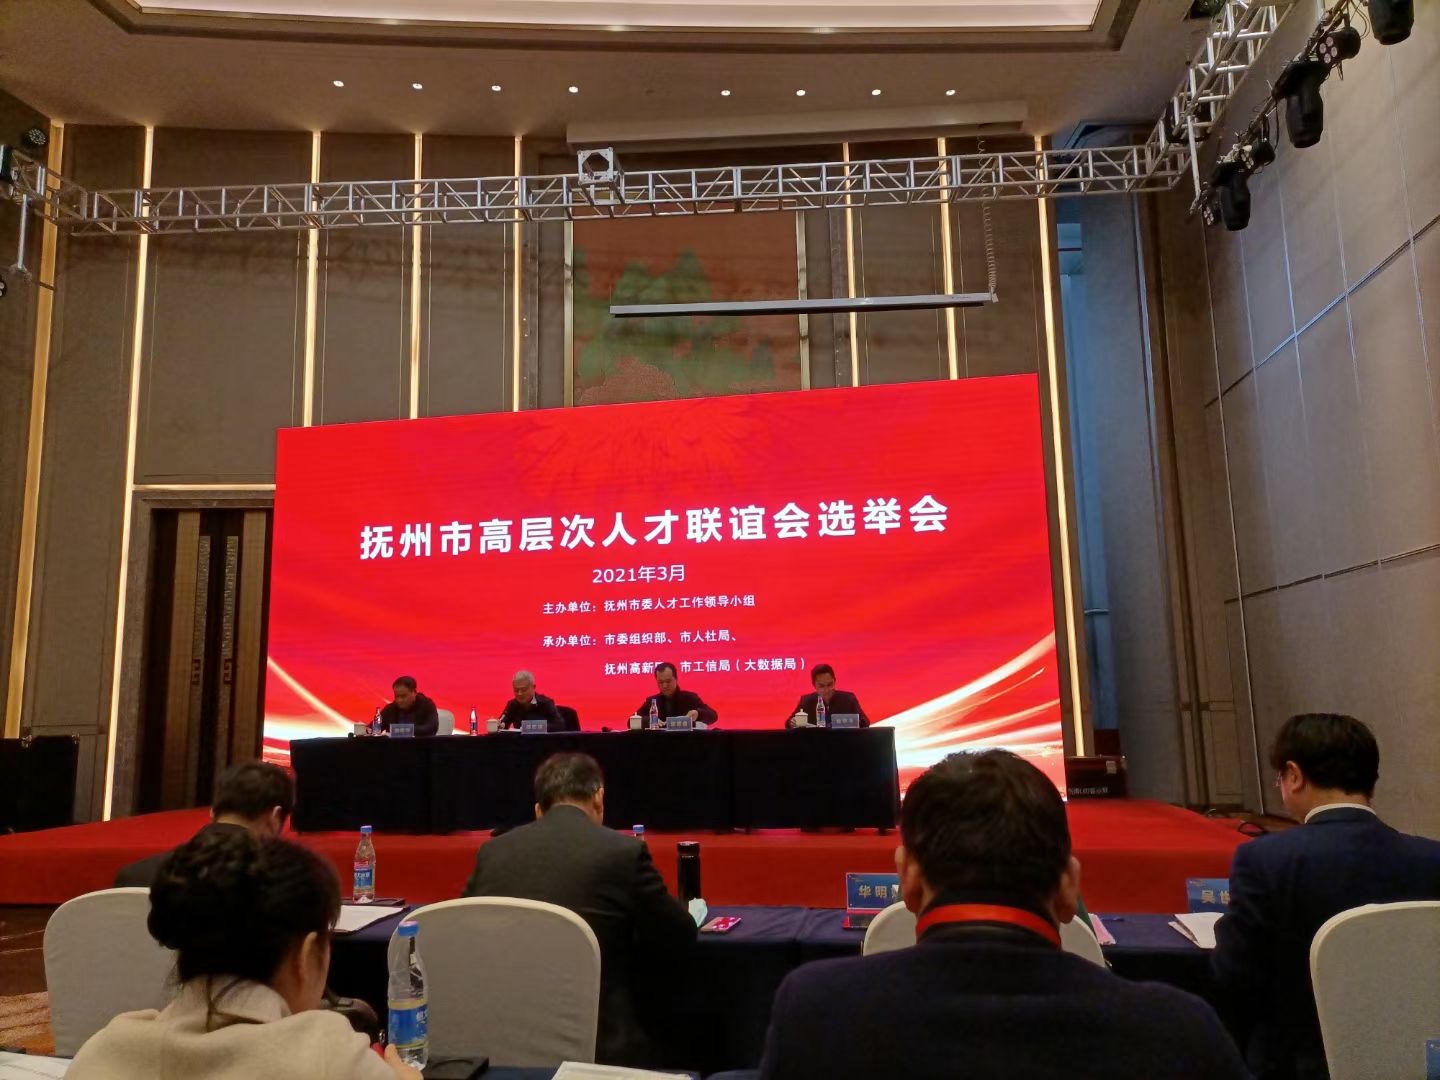 Congratulations to Zhang Aimin, chairman of Jiangxi Gandian Electric Co., Ltd., for being elected as the chairman of Fuzhou High-level Talents Association